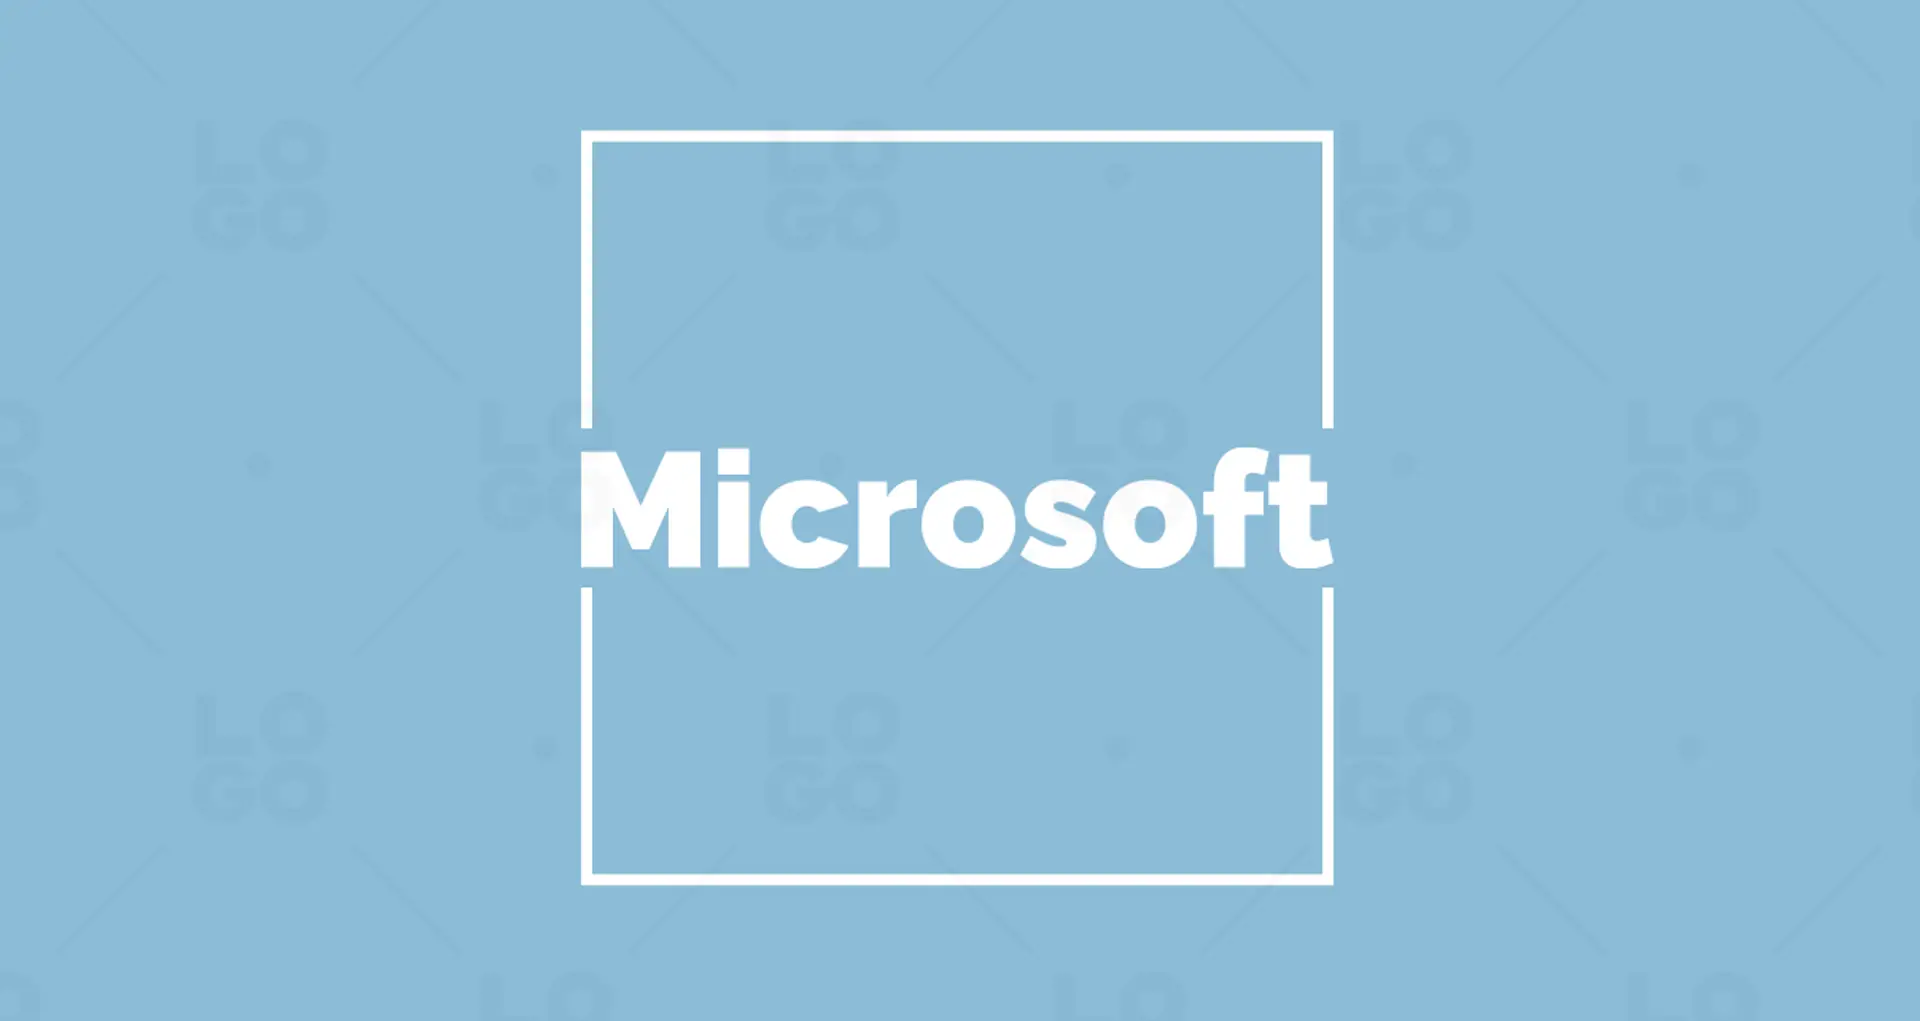 Microsoft logo variations